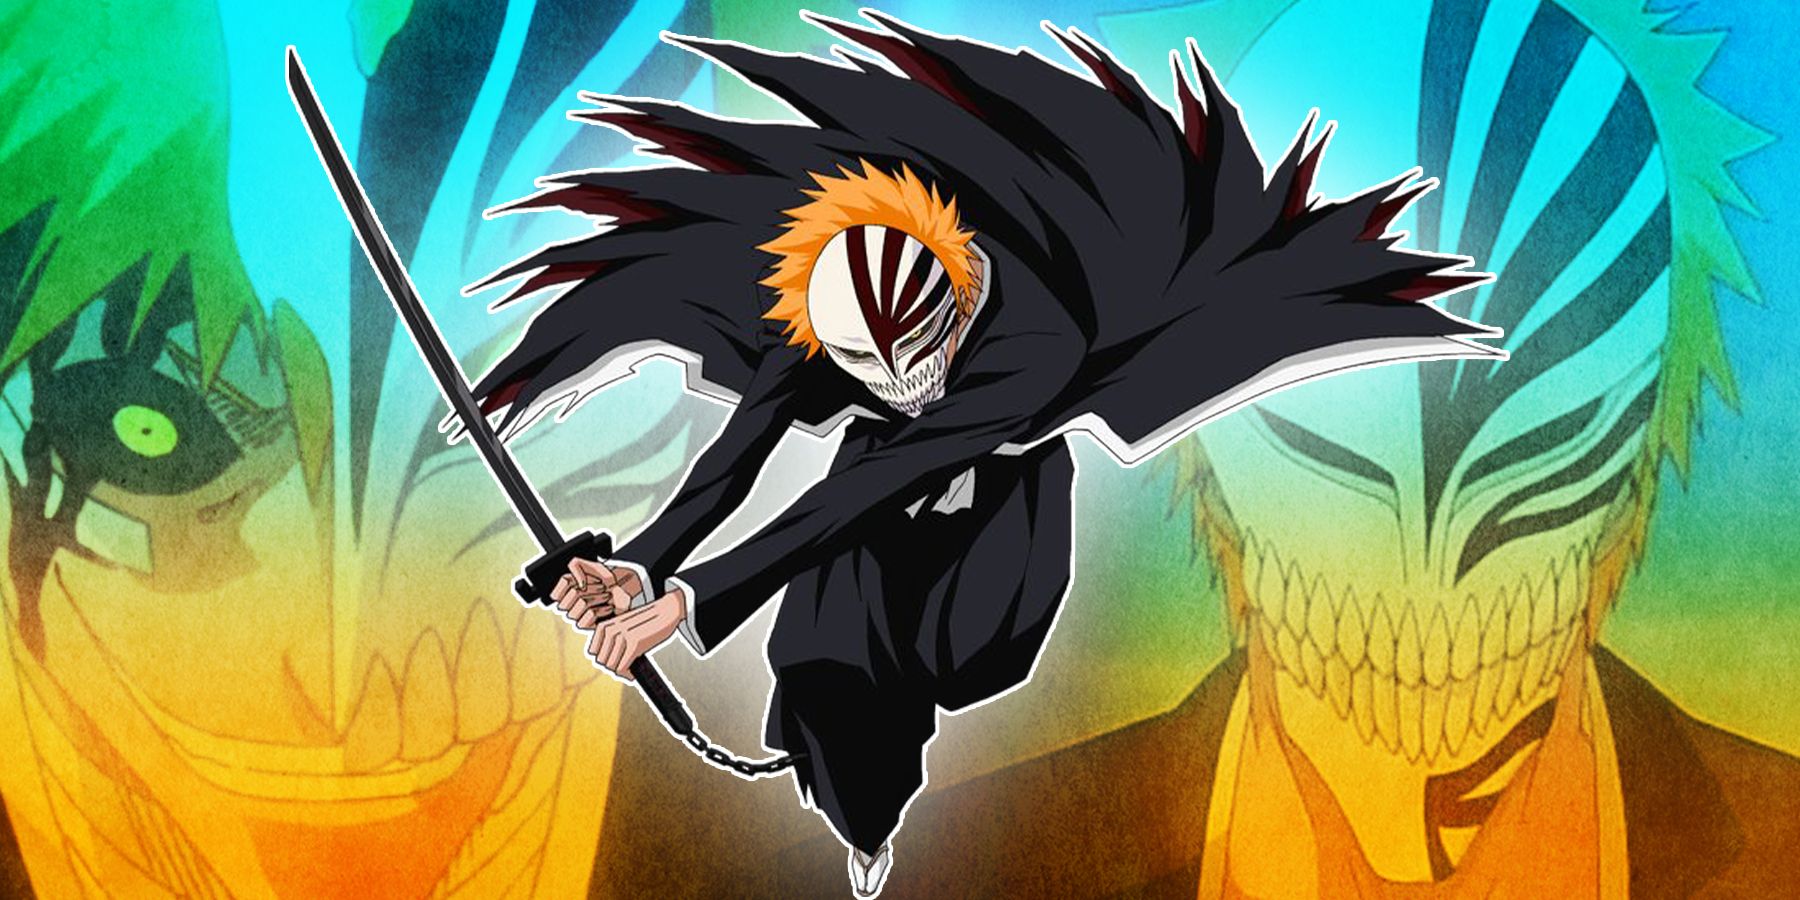 10 Ichigo Kurosaki Facts, Anime Bleach Protagonist Who Becomes a Shinigami  | Dunia Games